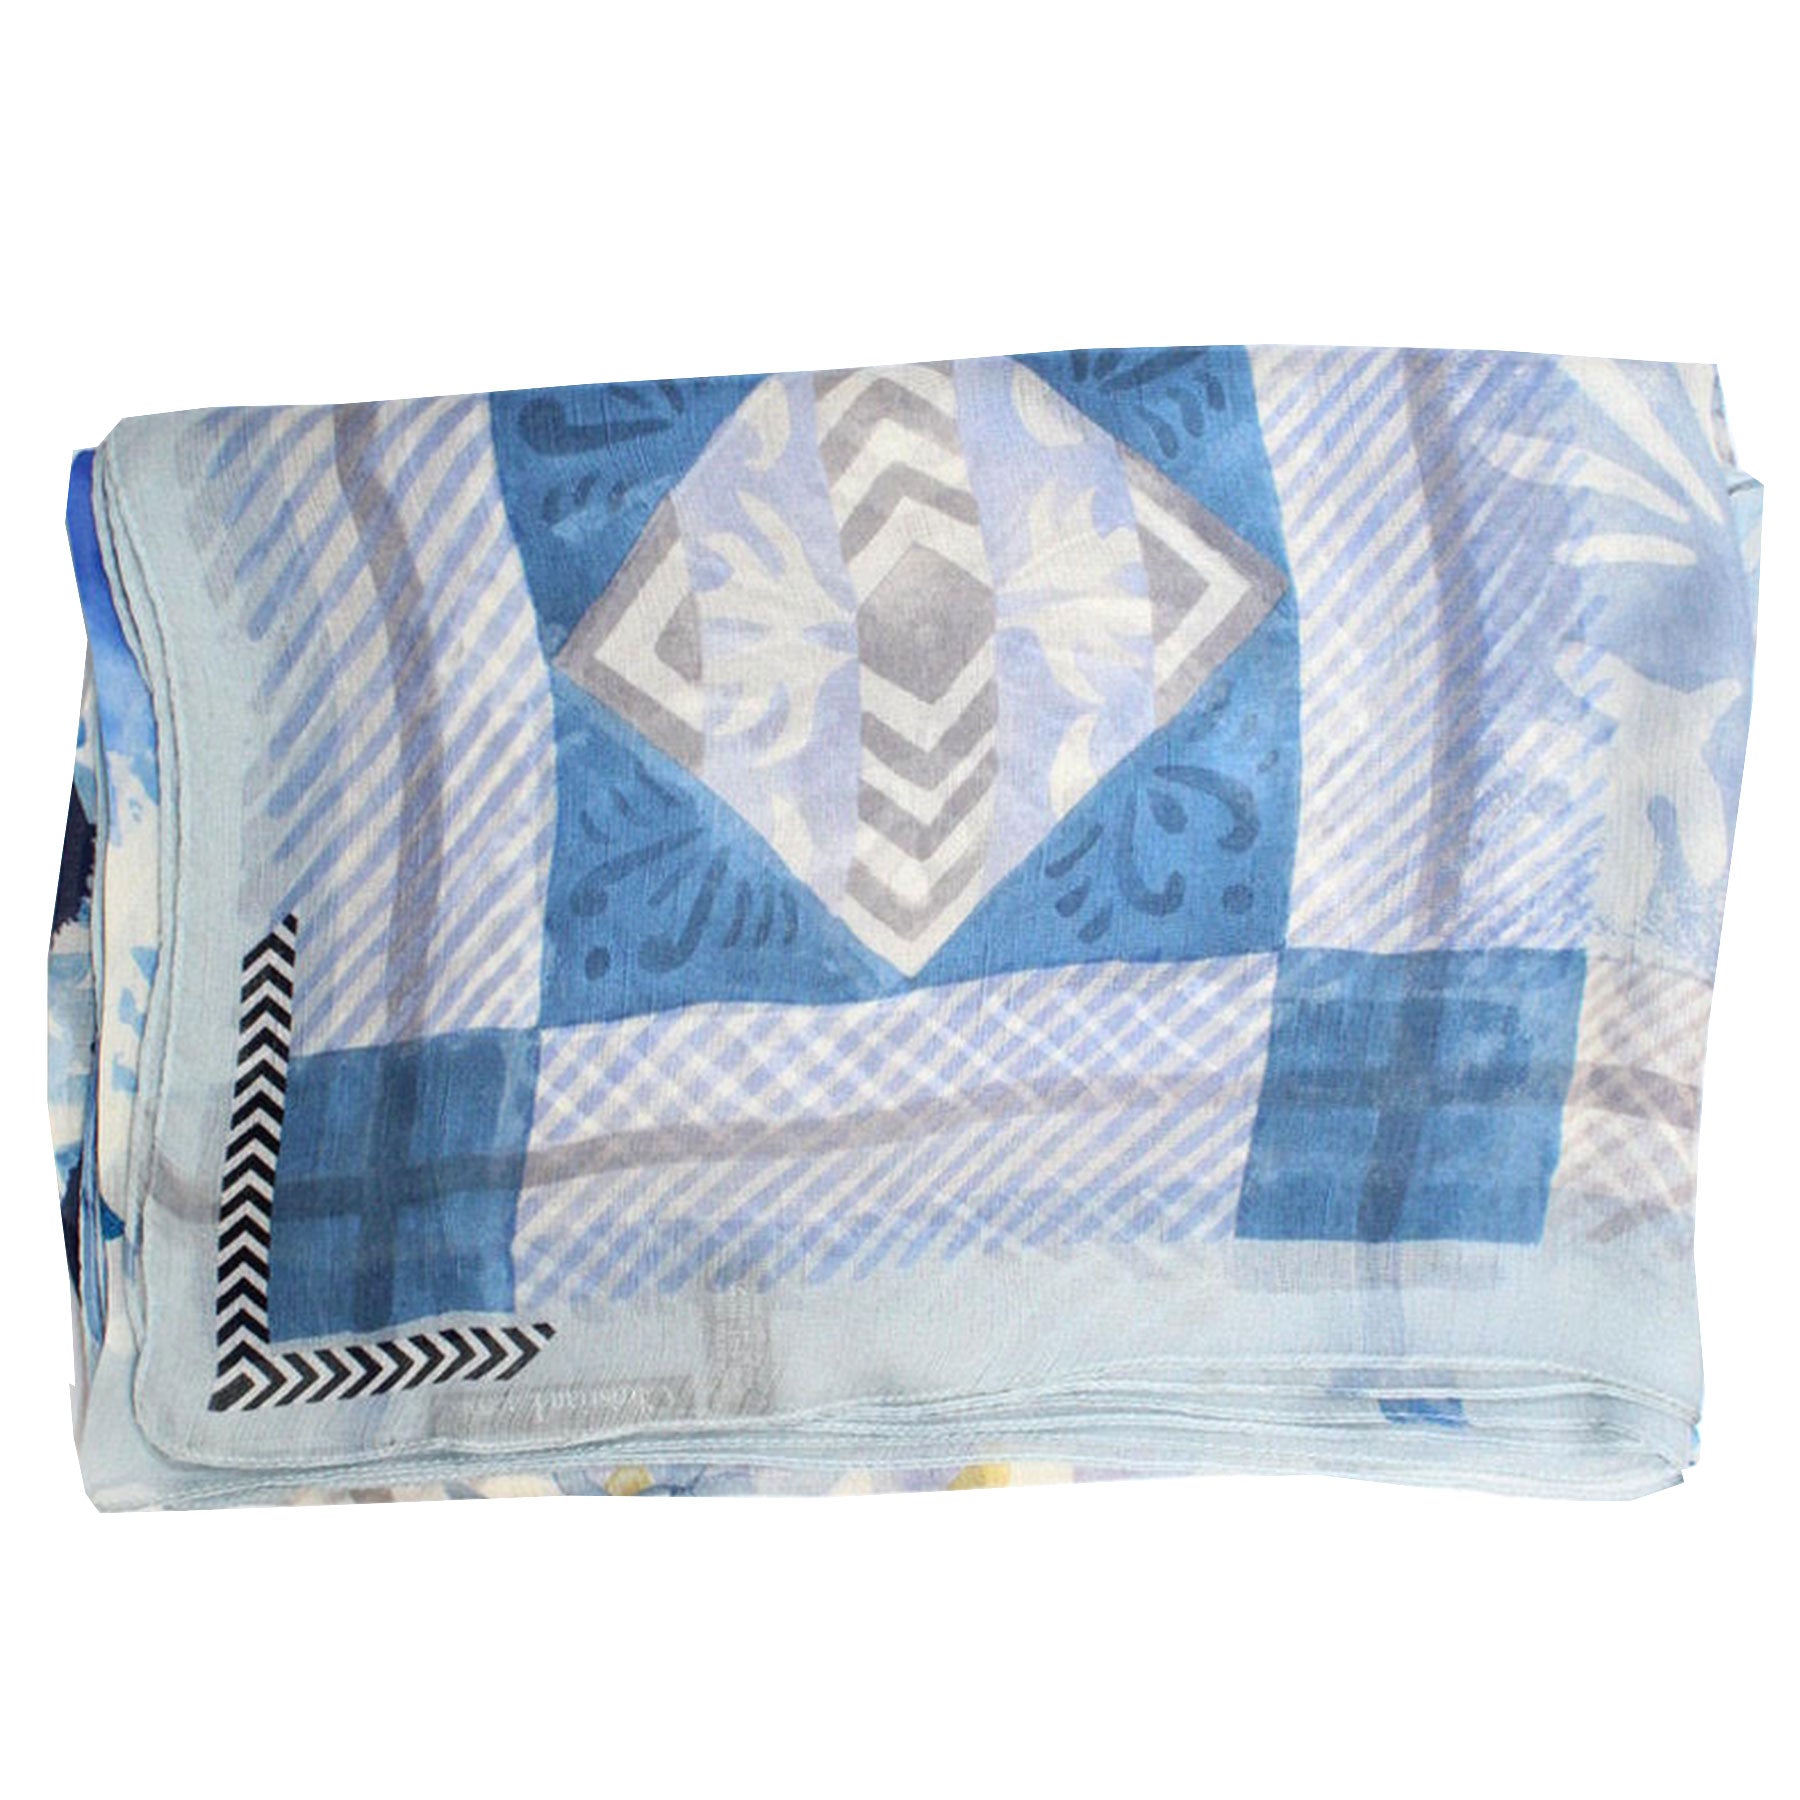 Christian Lacroix Scarf Original Print Blue Gray Geometric - Extra Large Silk Square Wrap SALE